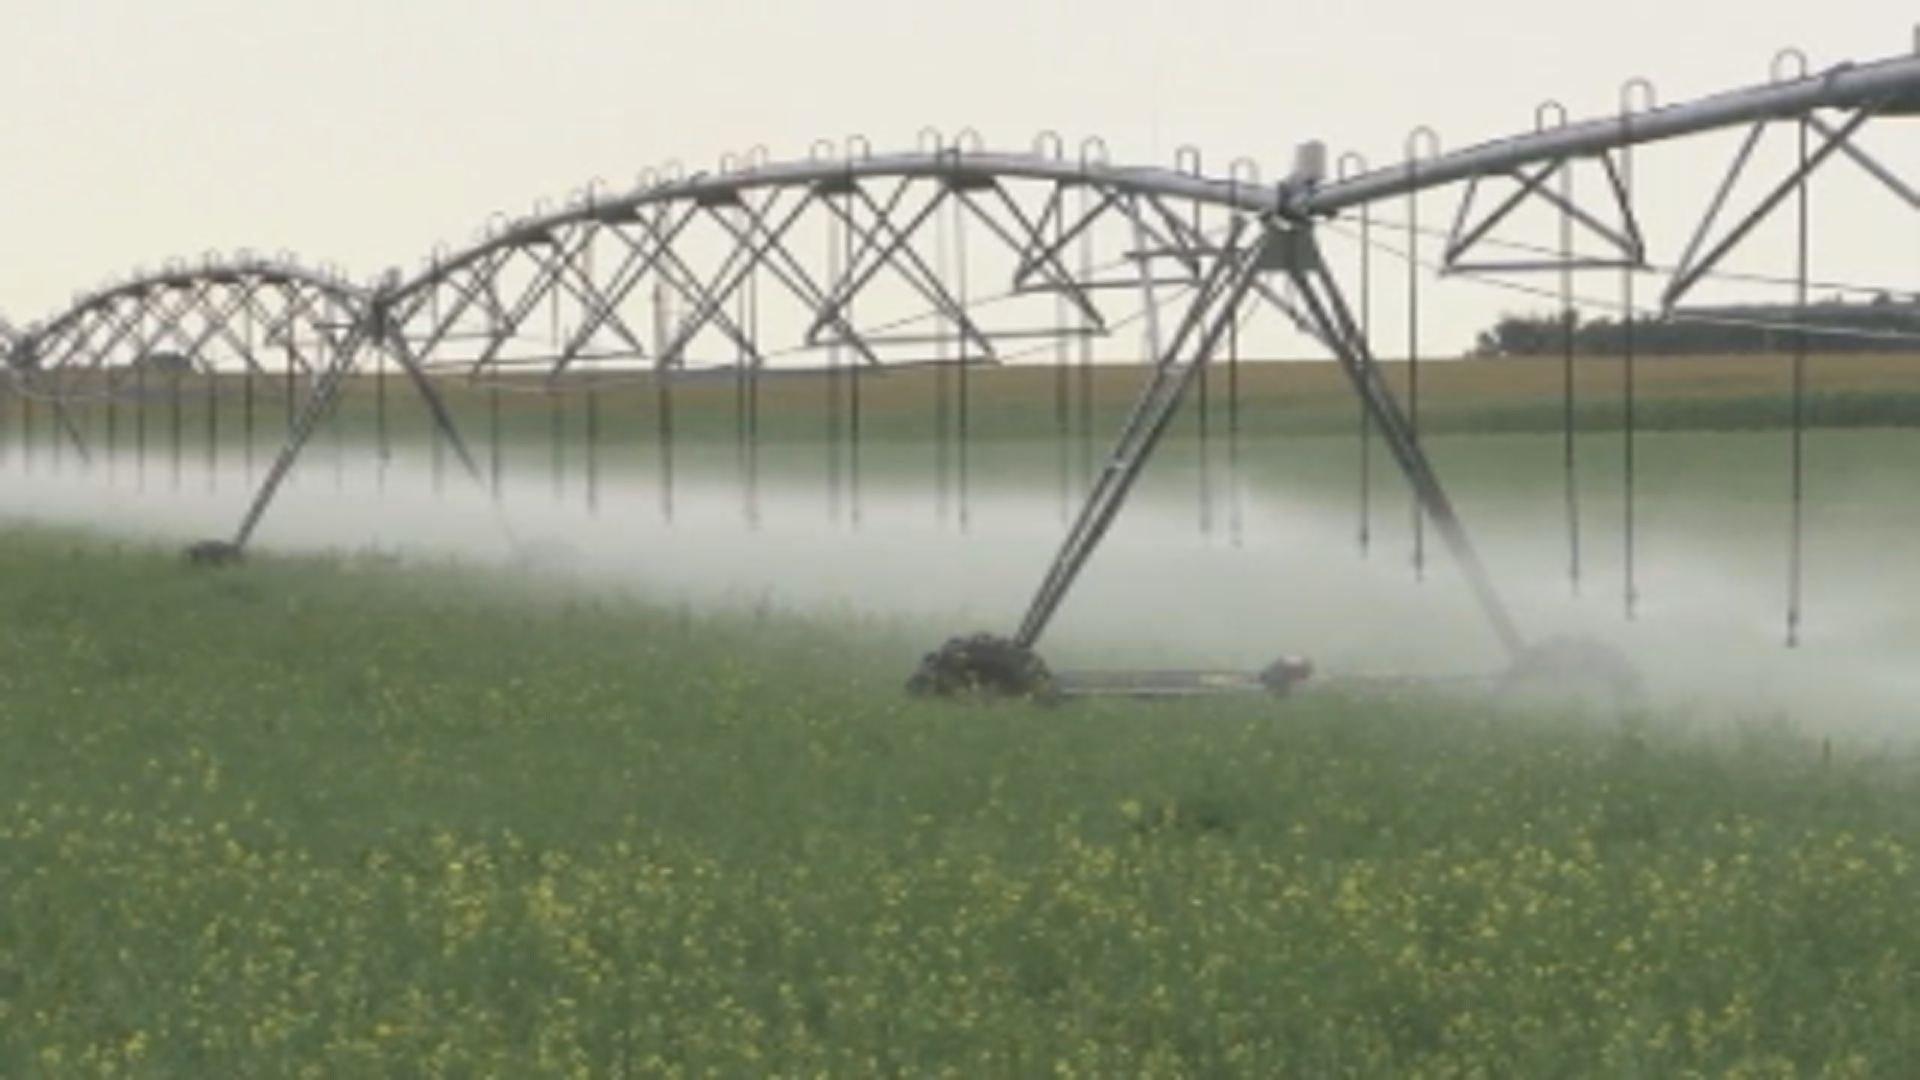 Alberta invests $19M for irrigation infrastructure upgrades